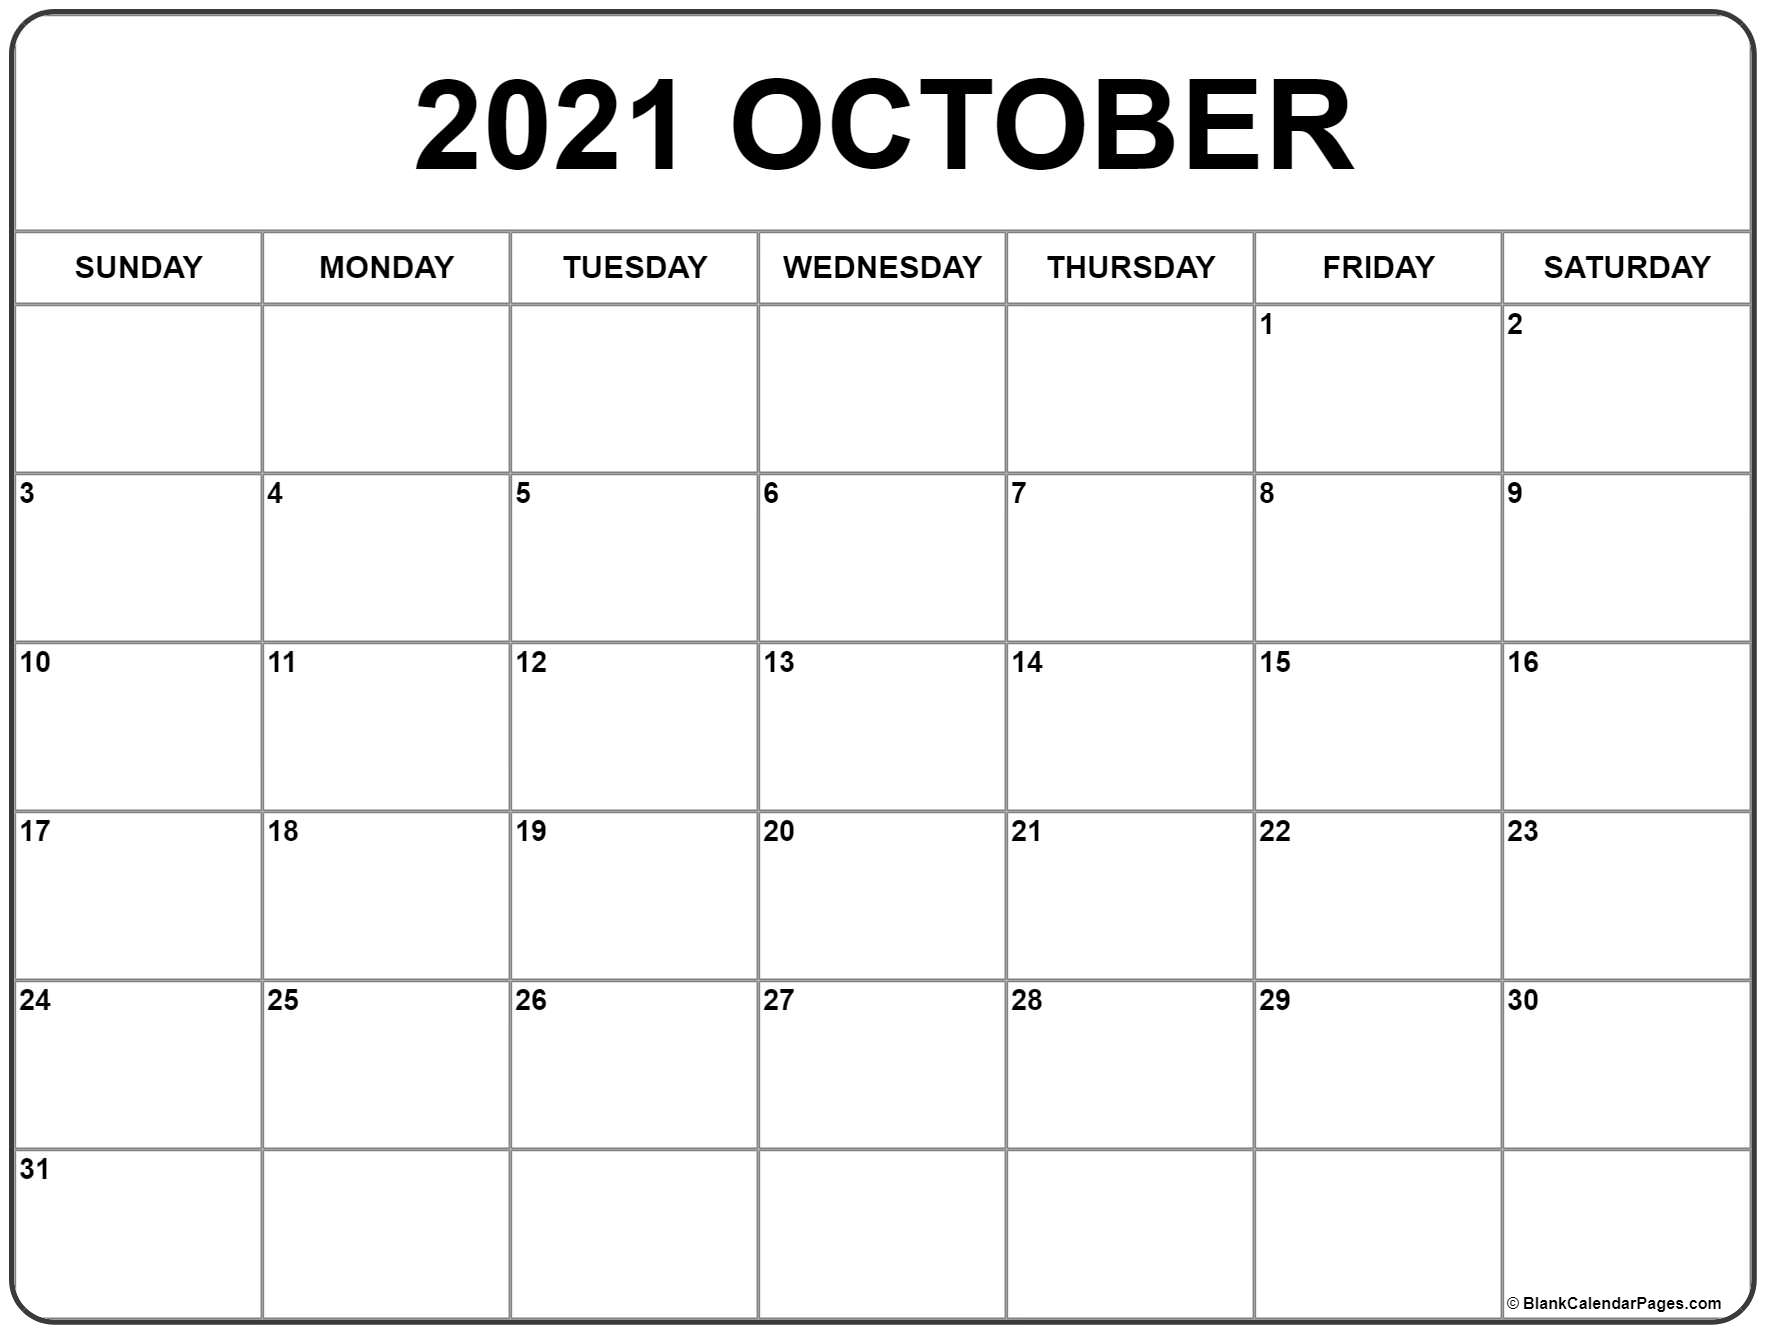 October 2021 Calendar | Free Printable Monthly Calendars